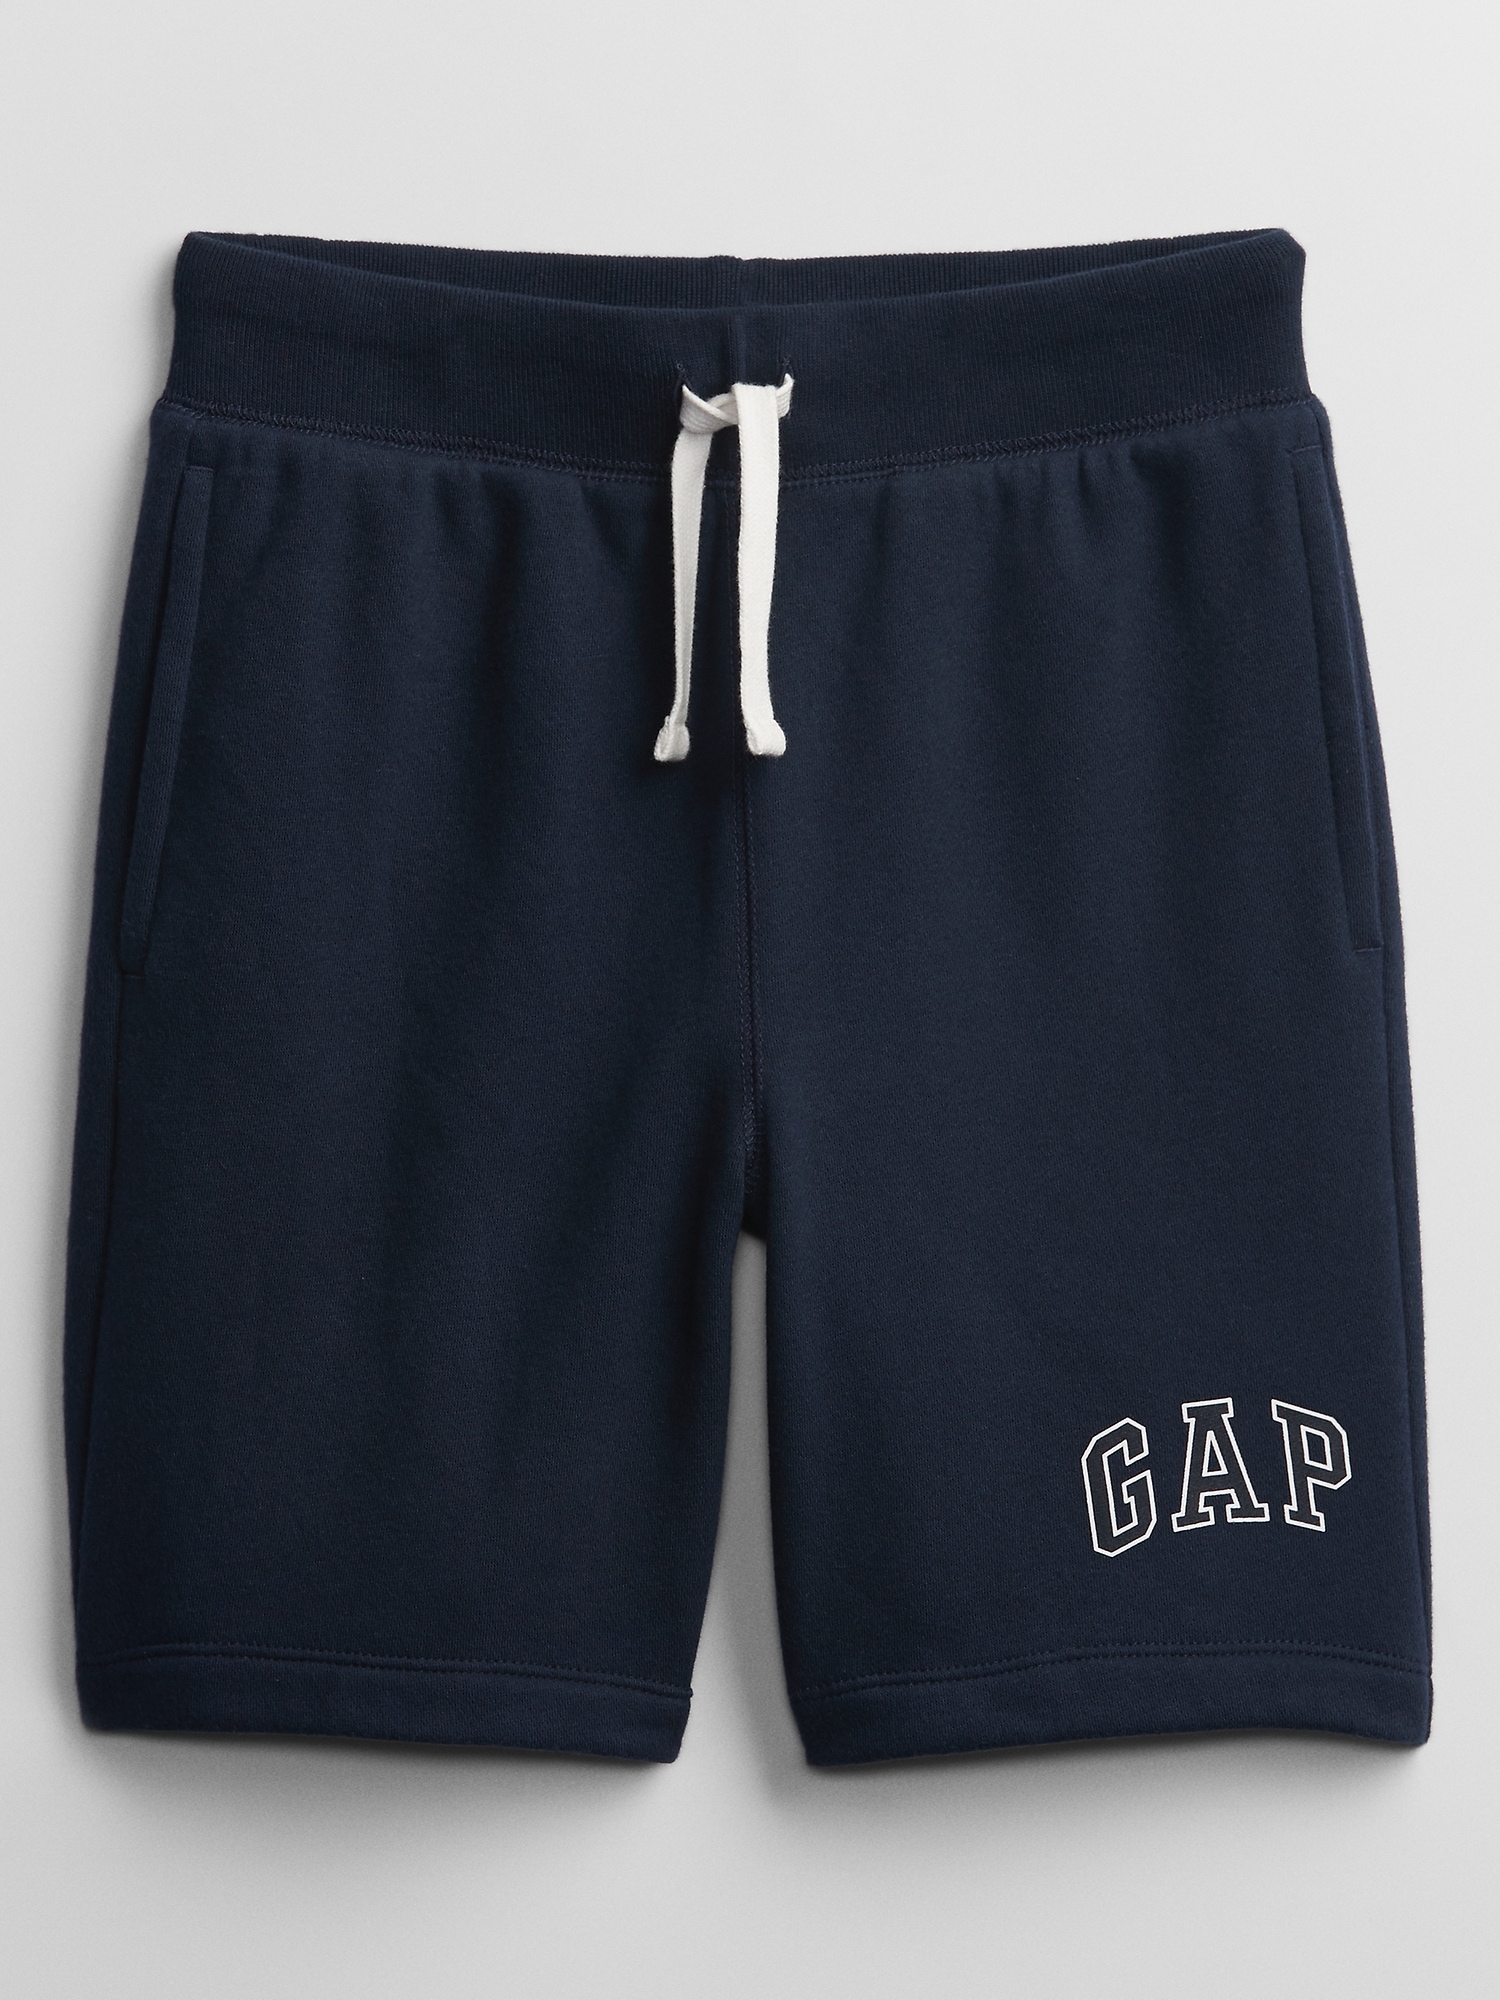 Kids Gap Logo Pull-On Shorts | Gap Factory